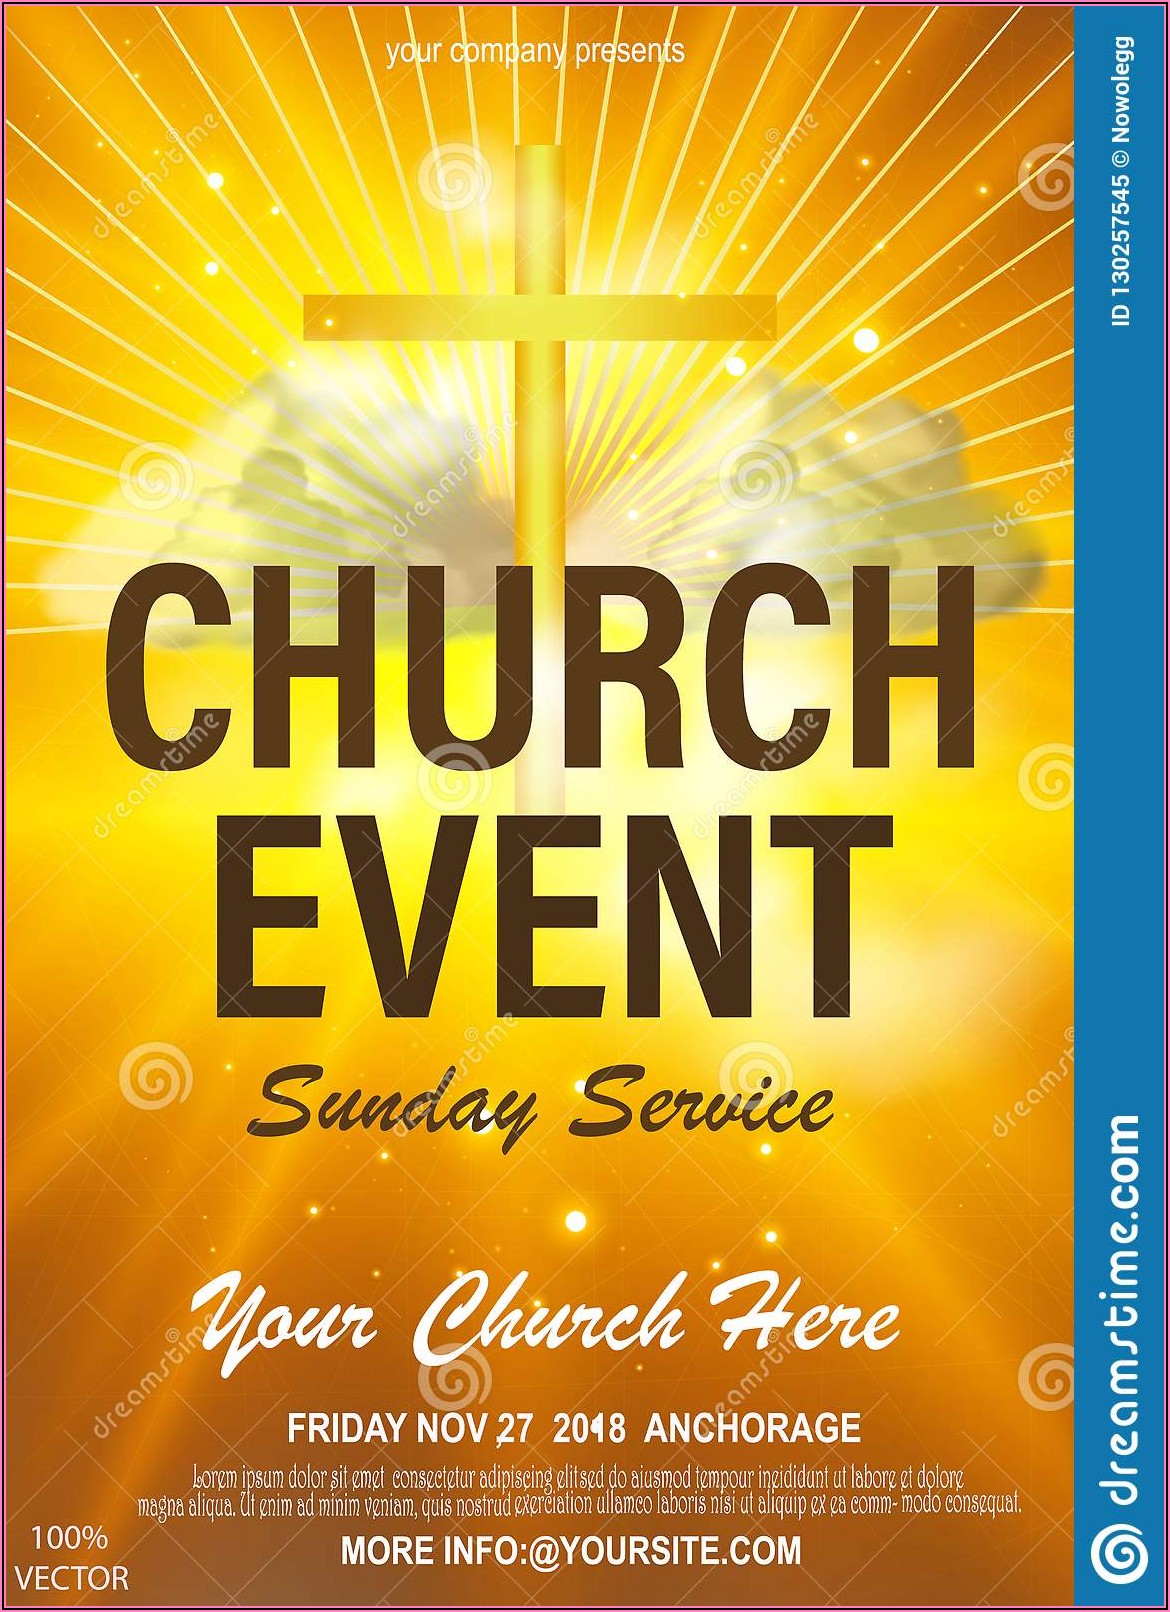 Church Invitation Flyer Template